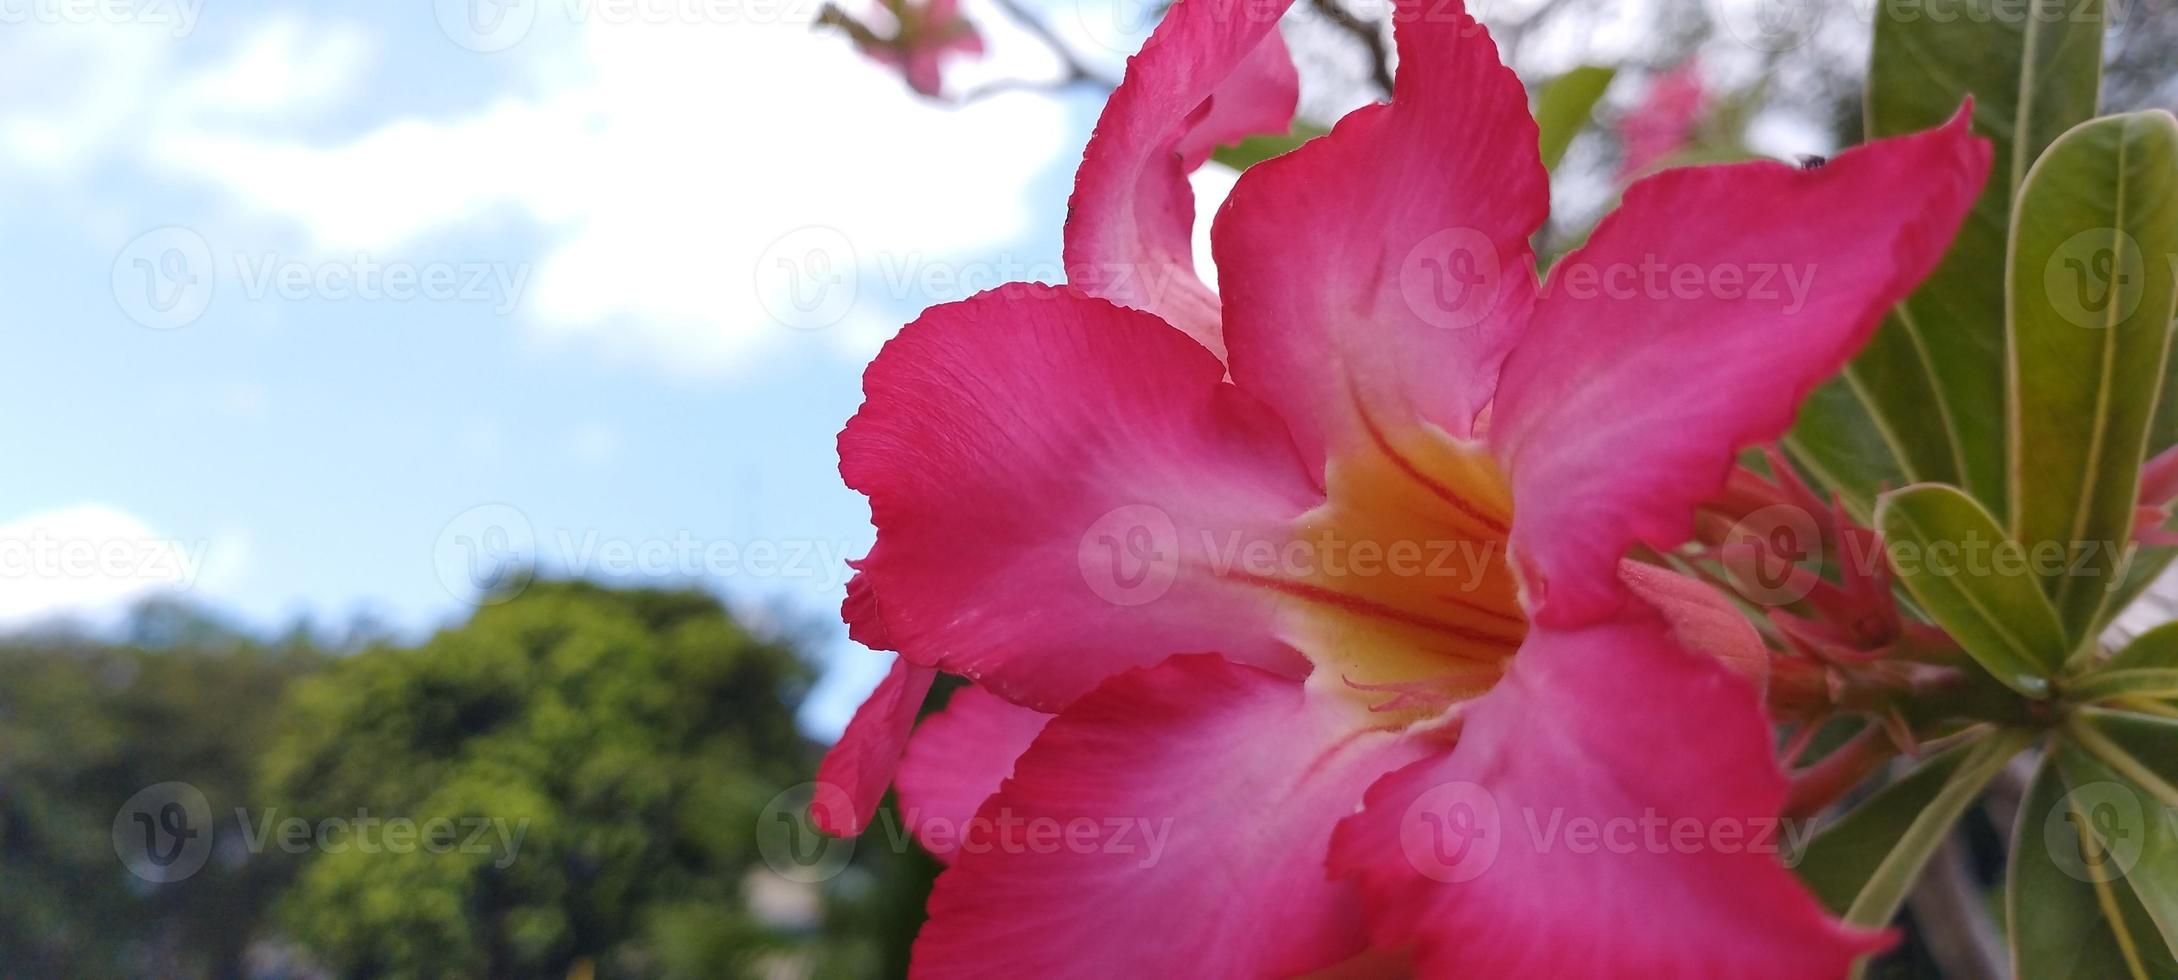 pink or red frangipani flower ornamental plant photo